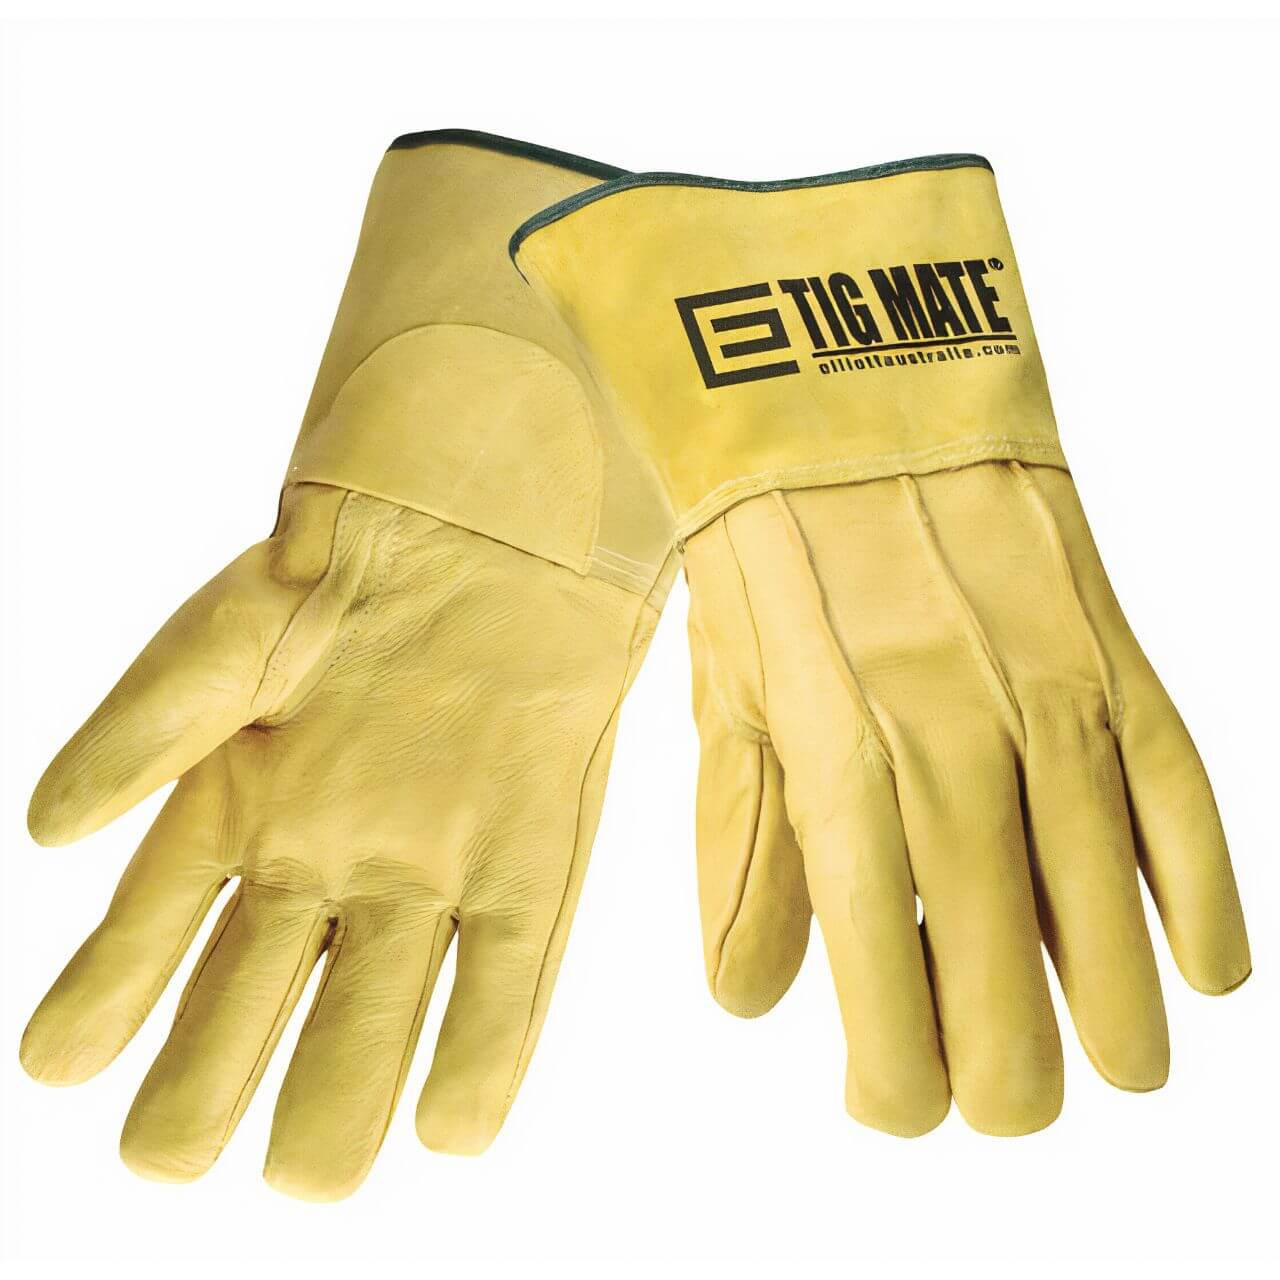 Tigmate Welding Gloves 280mm M